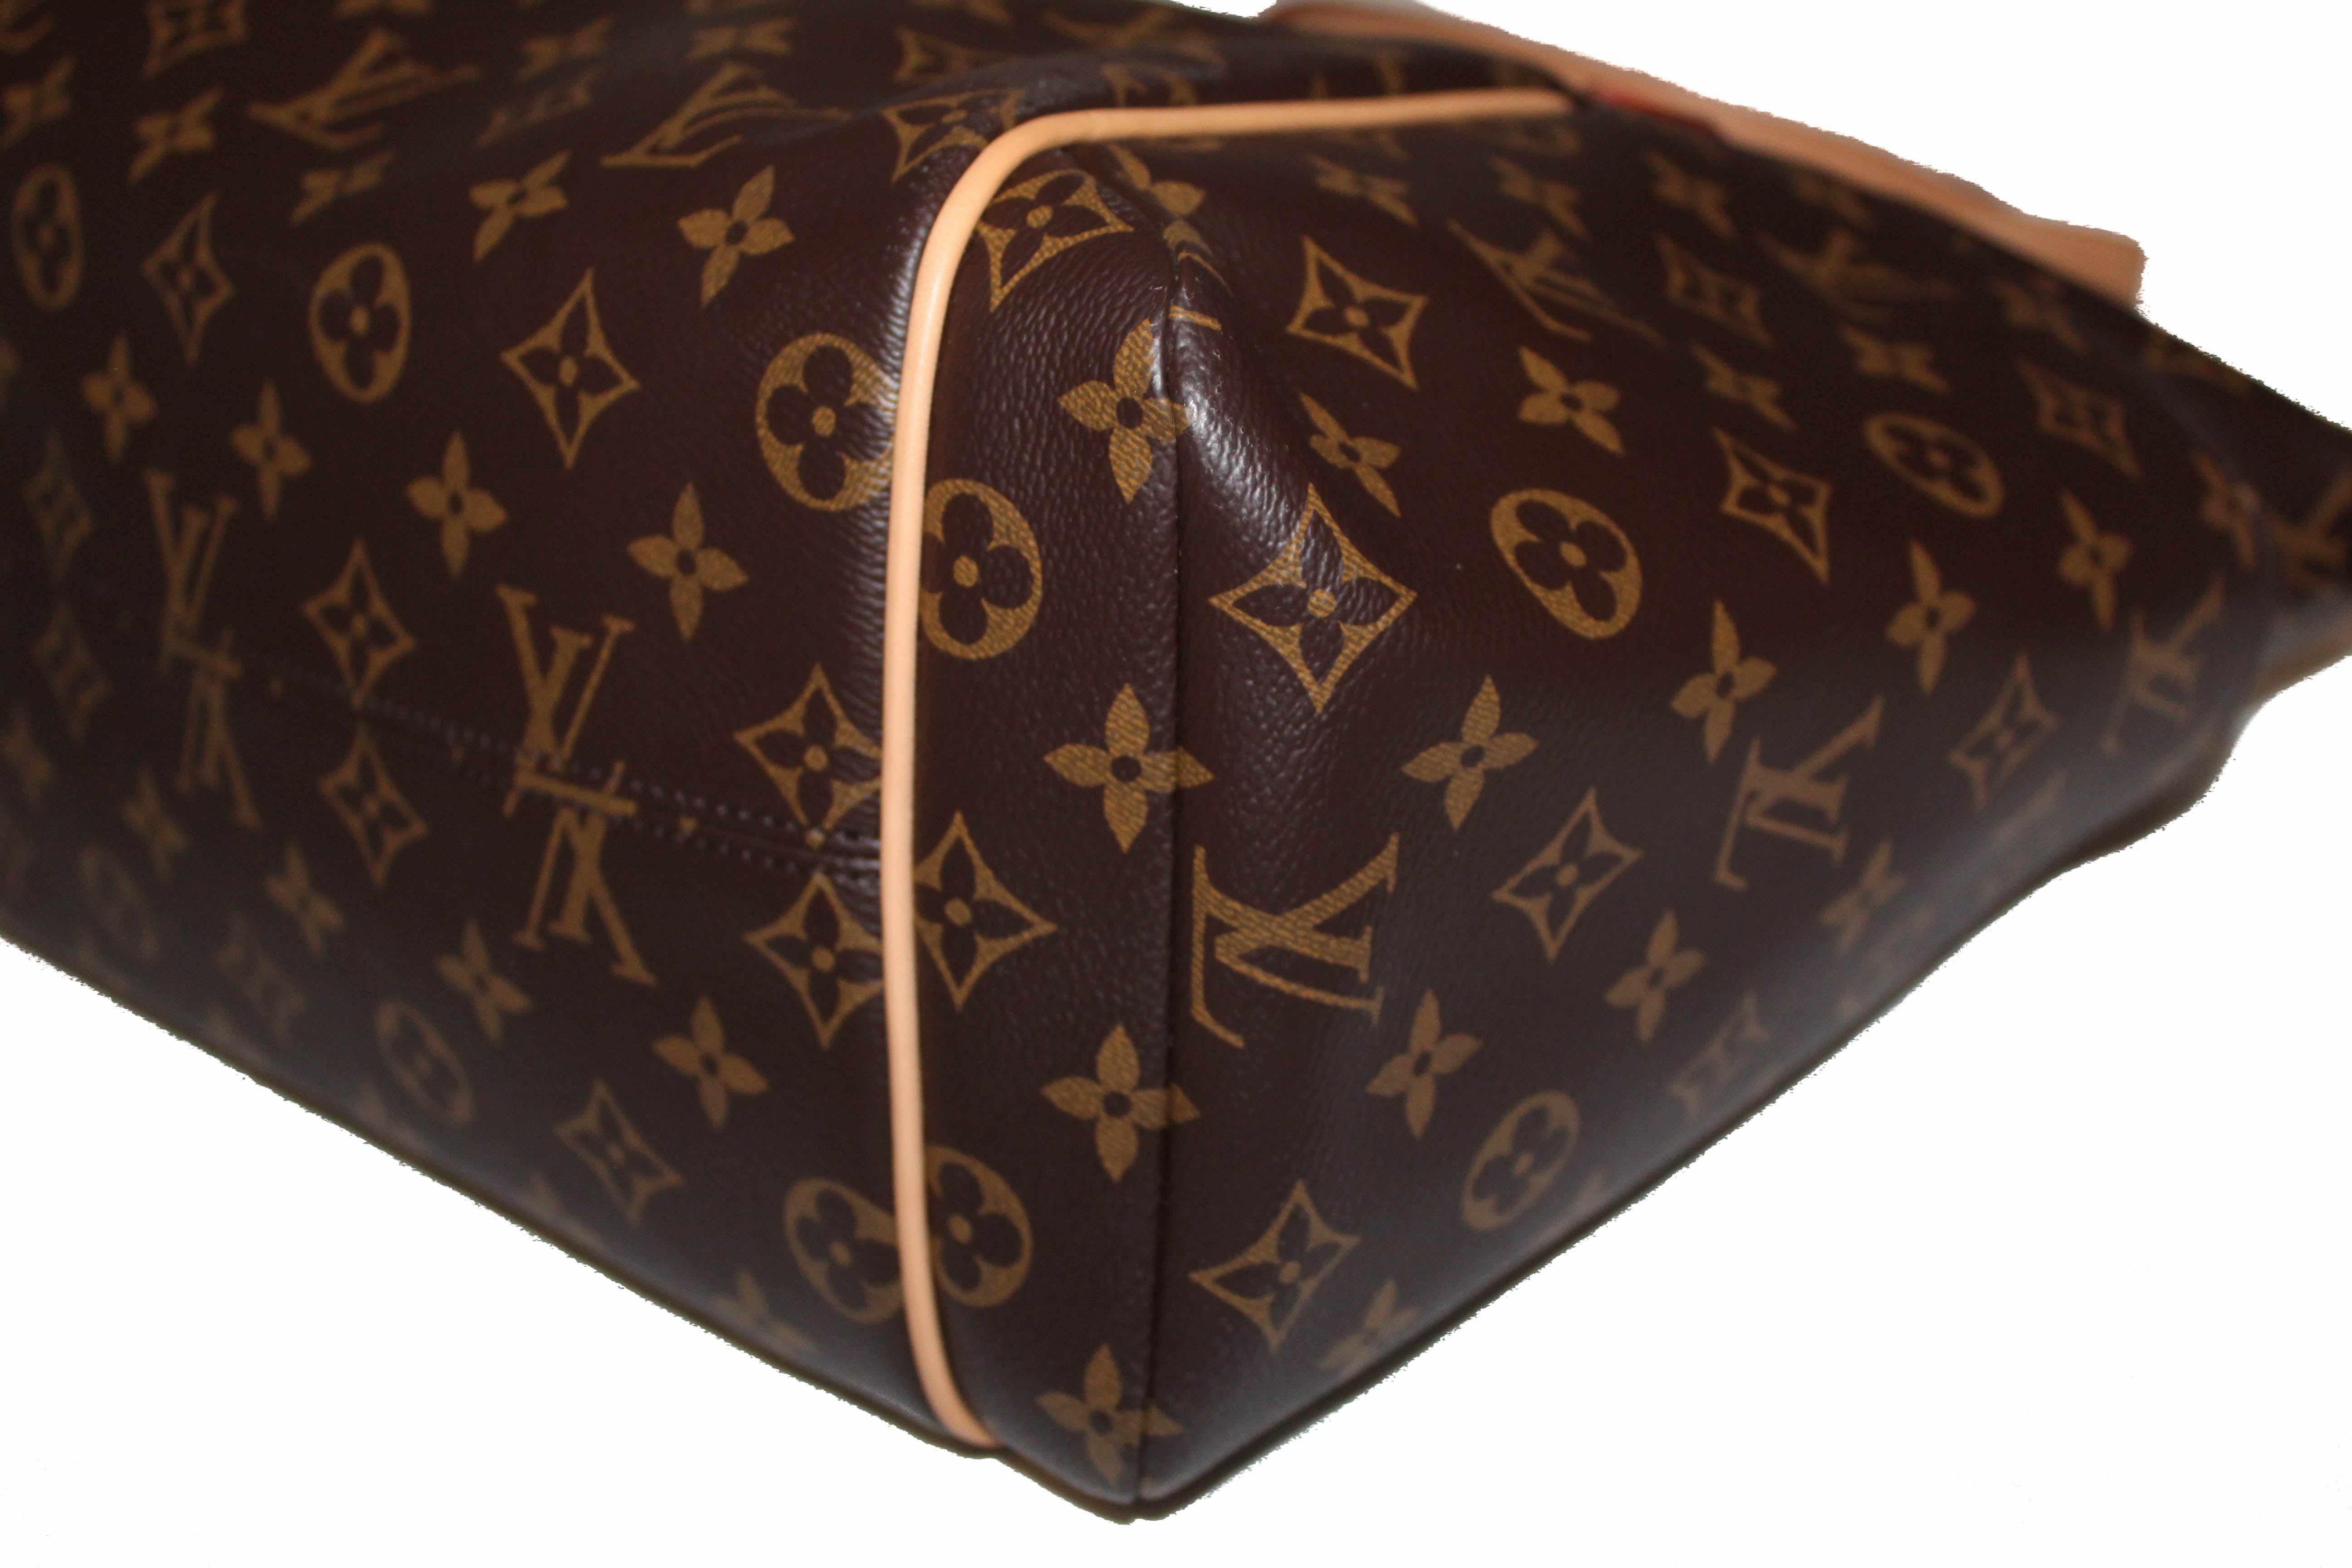 Authentic Louis Vuitton Classic Monogram Totally MM Tote Shoulder Bag